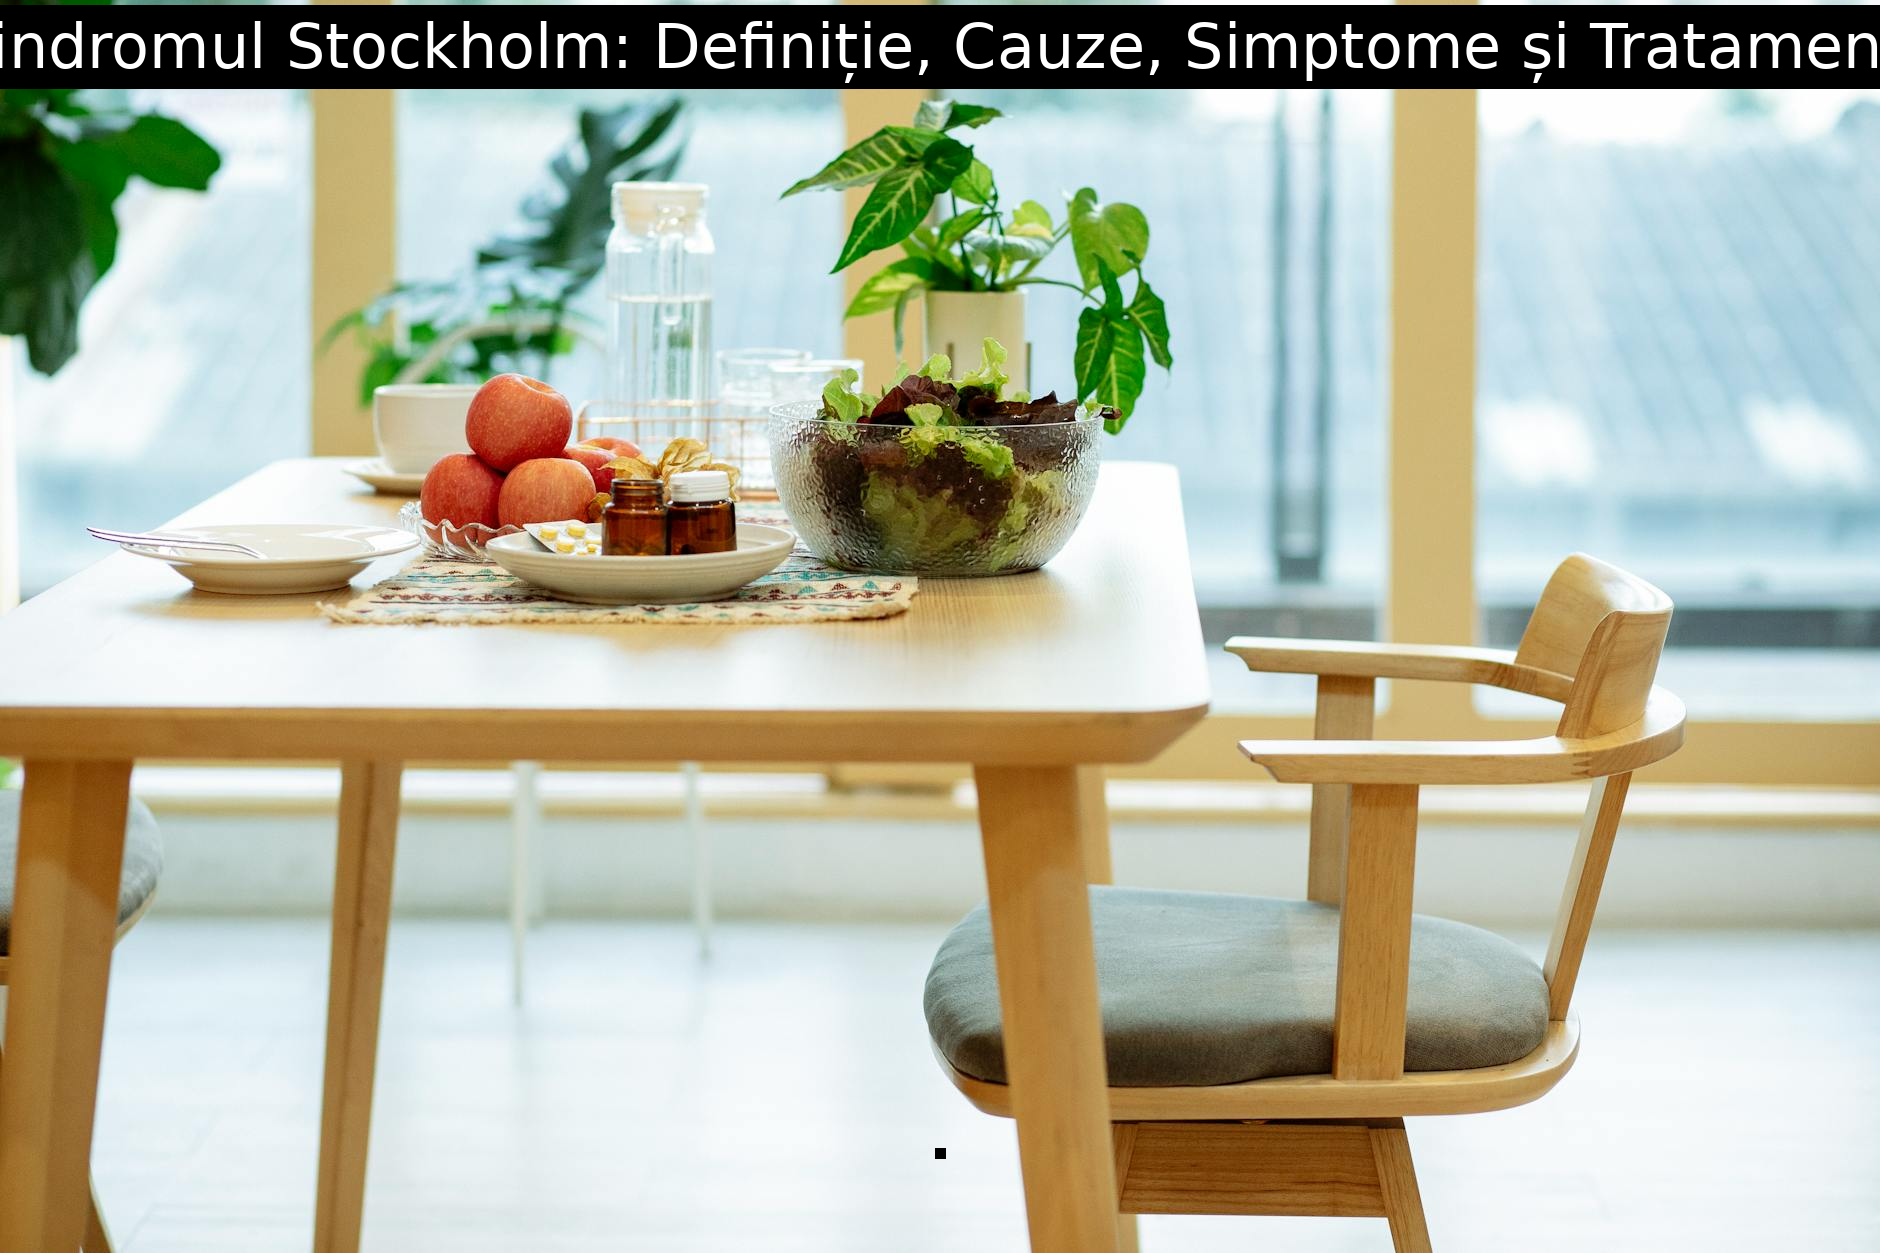 Sindromul Stockholm: Definiție, Cauze, Simptome și Tratament.